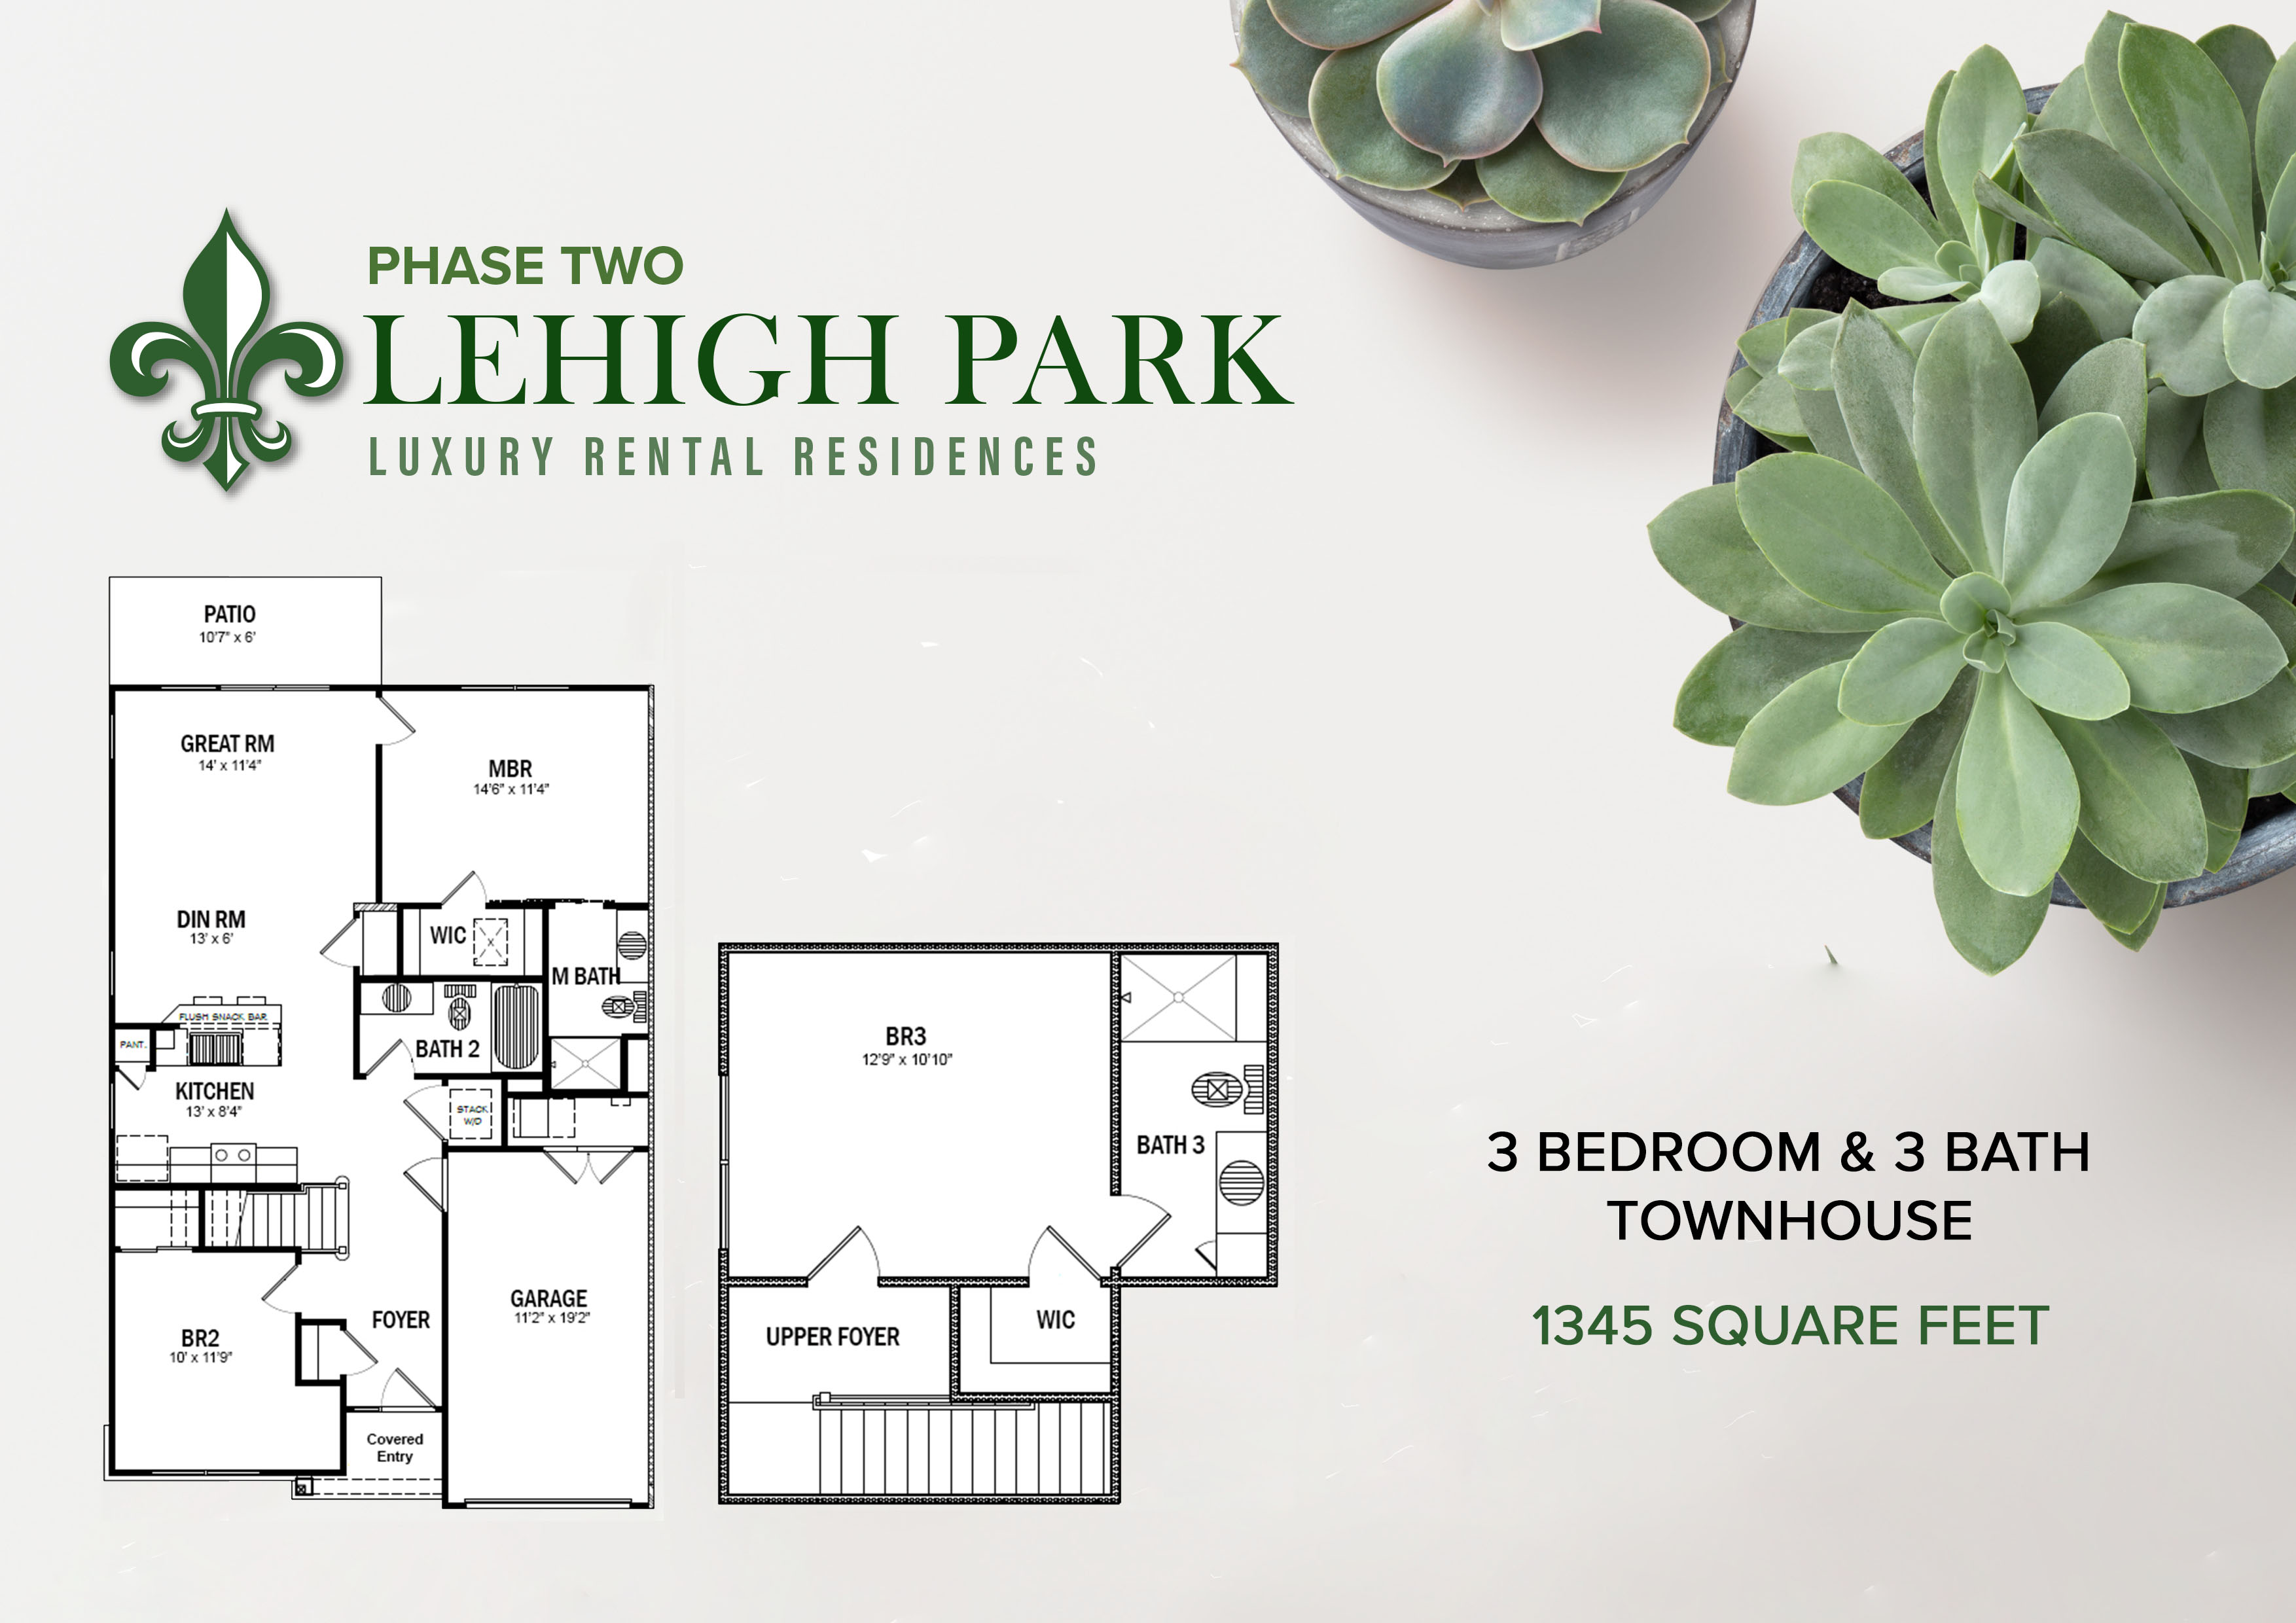 Lehigh Park Luxury Apartments - Floorplan - (Phase Two) 3 Bedroom & 3 Bath Apartment Home